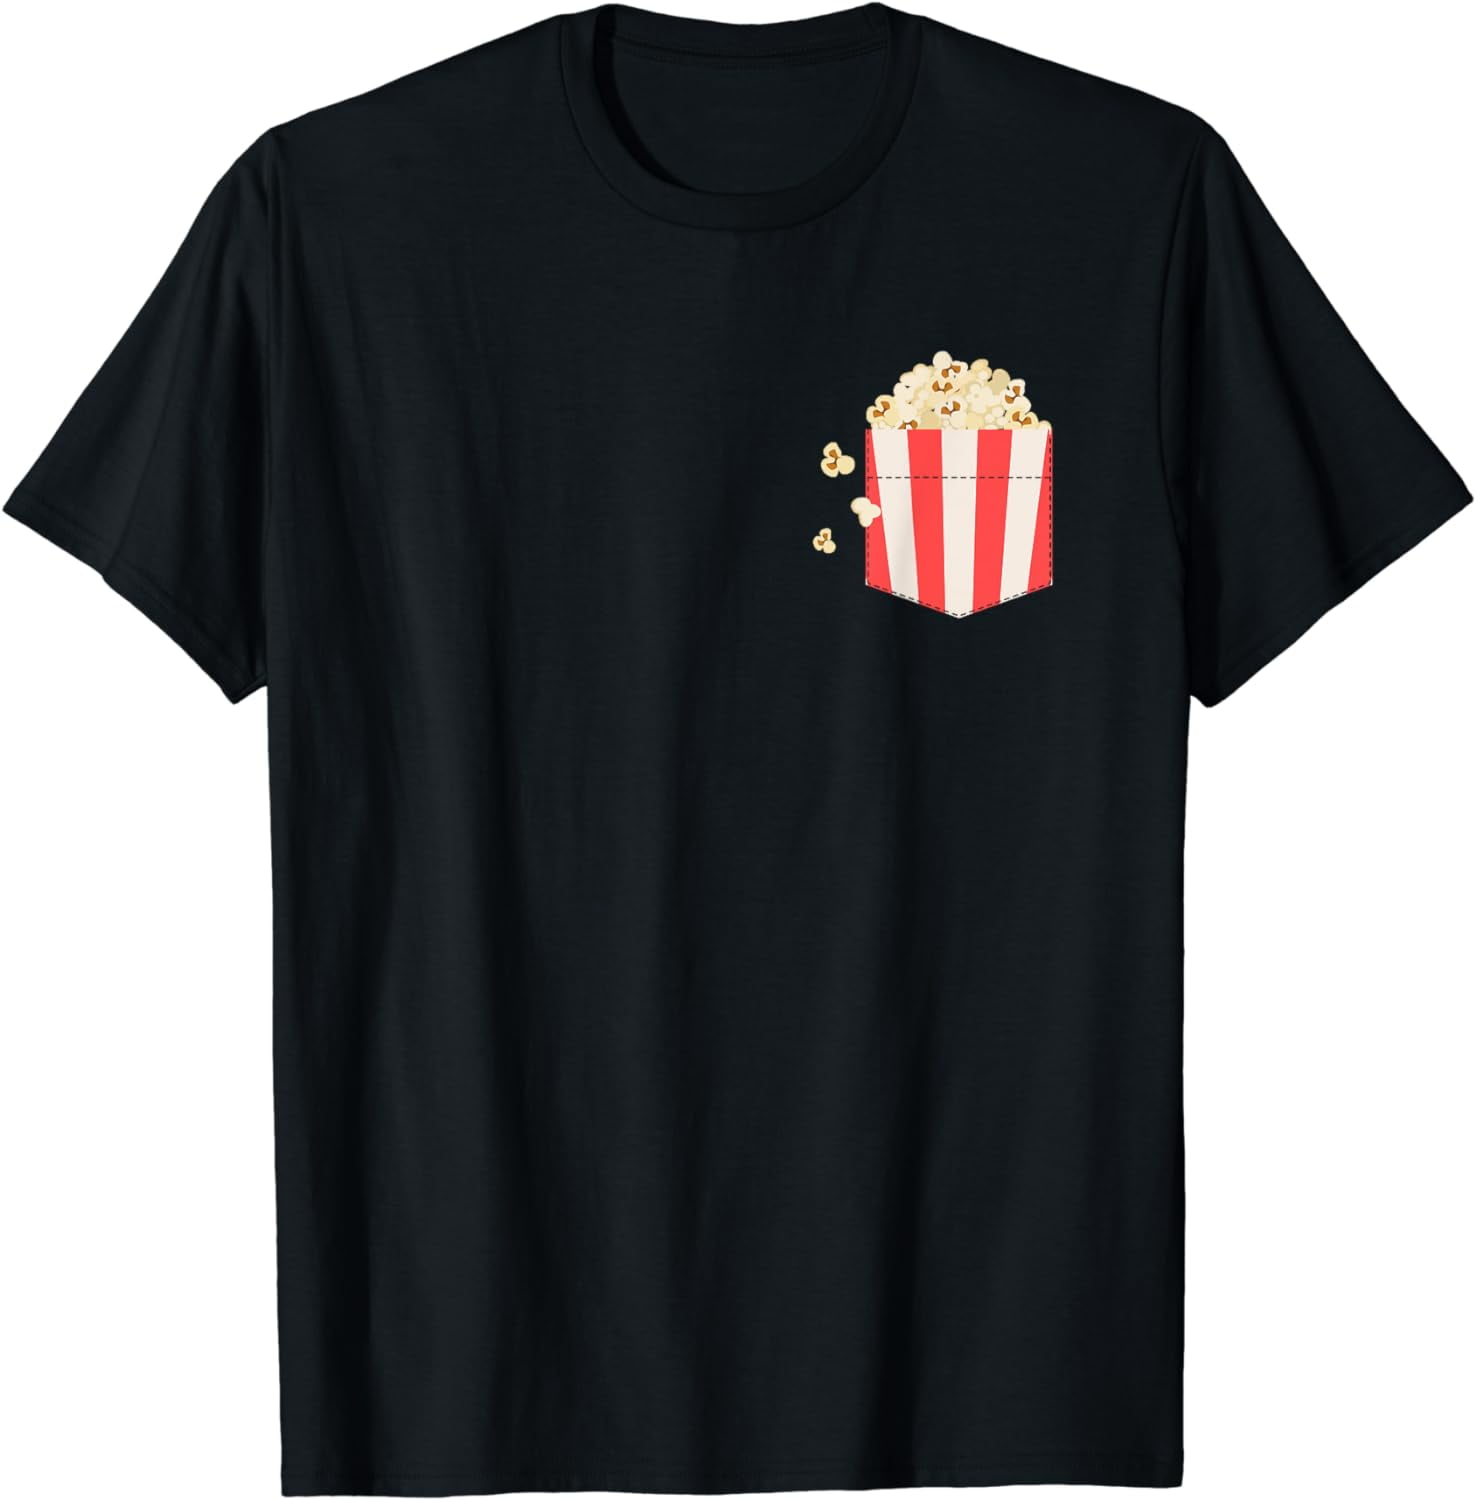 Pocket Popcorn T-Shirt - Walmart.com